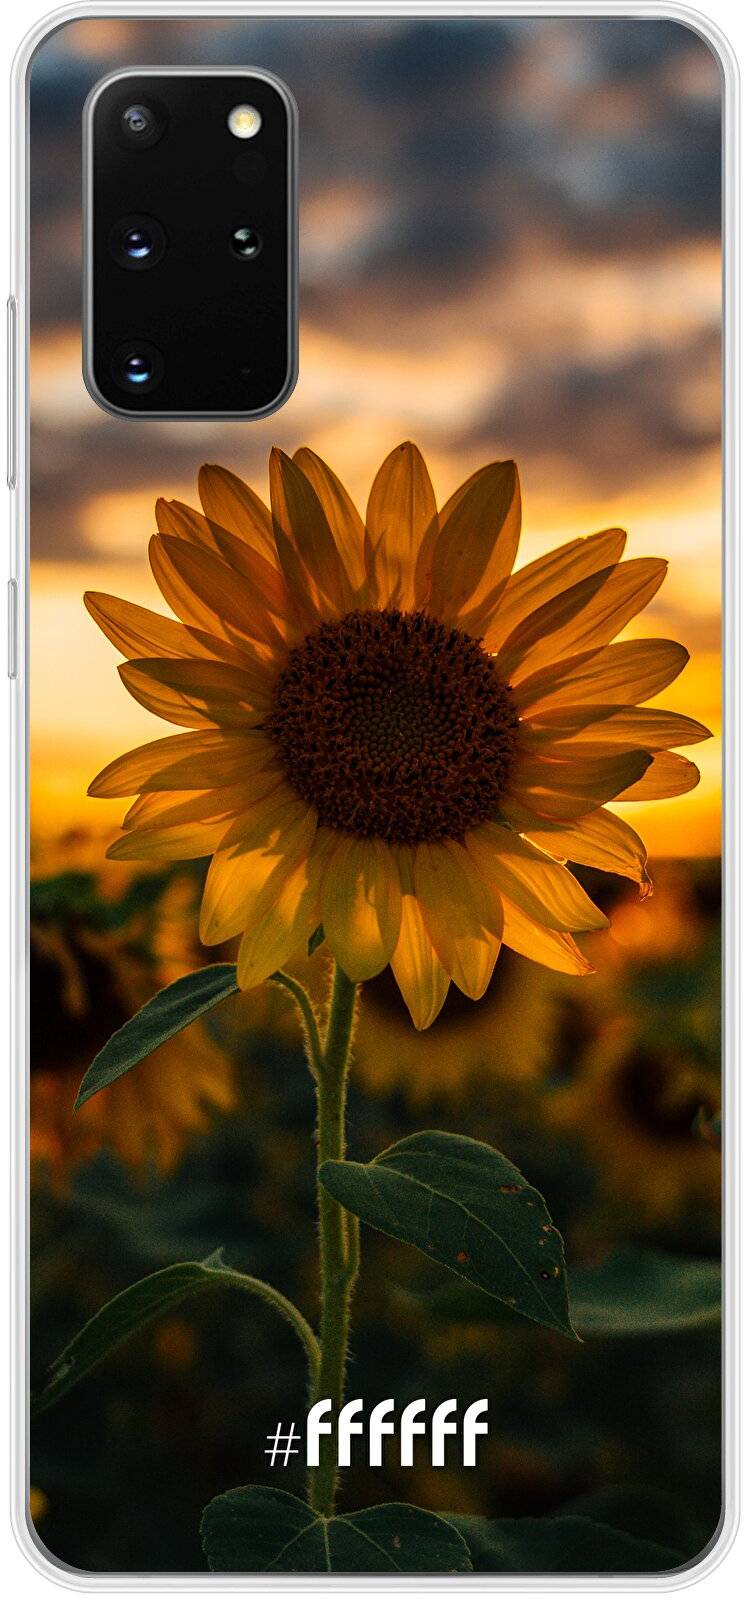 Sunset Sunflower Galaxy S20+